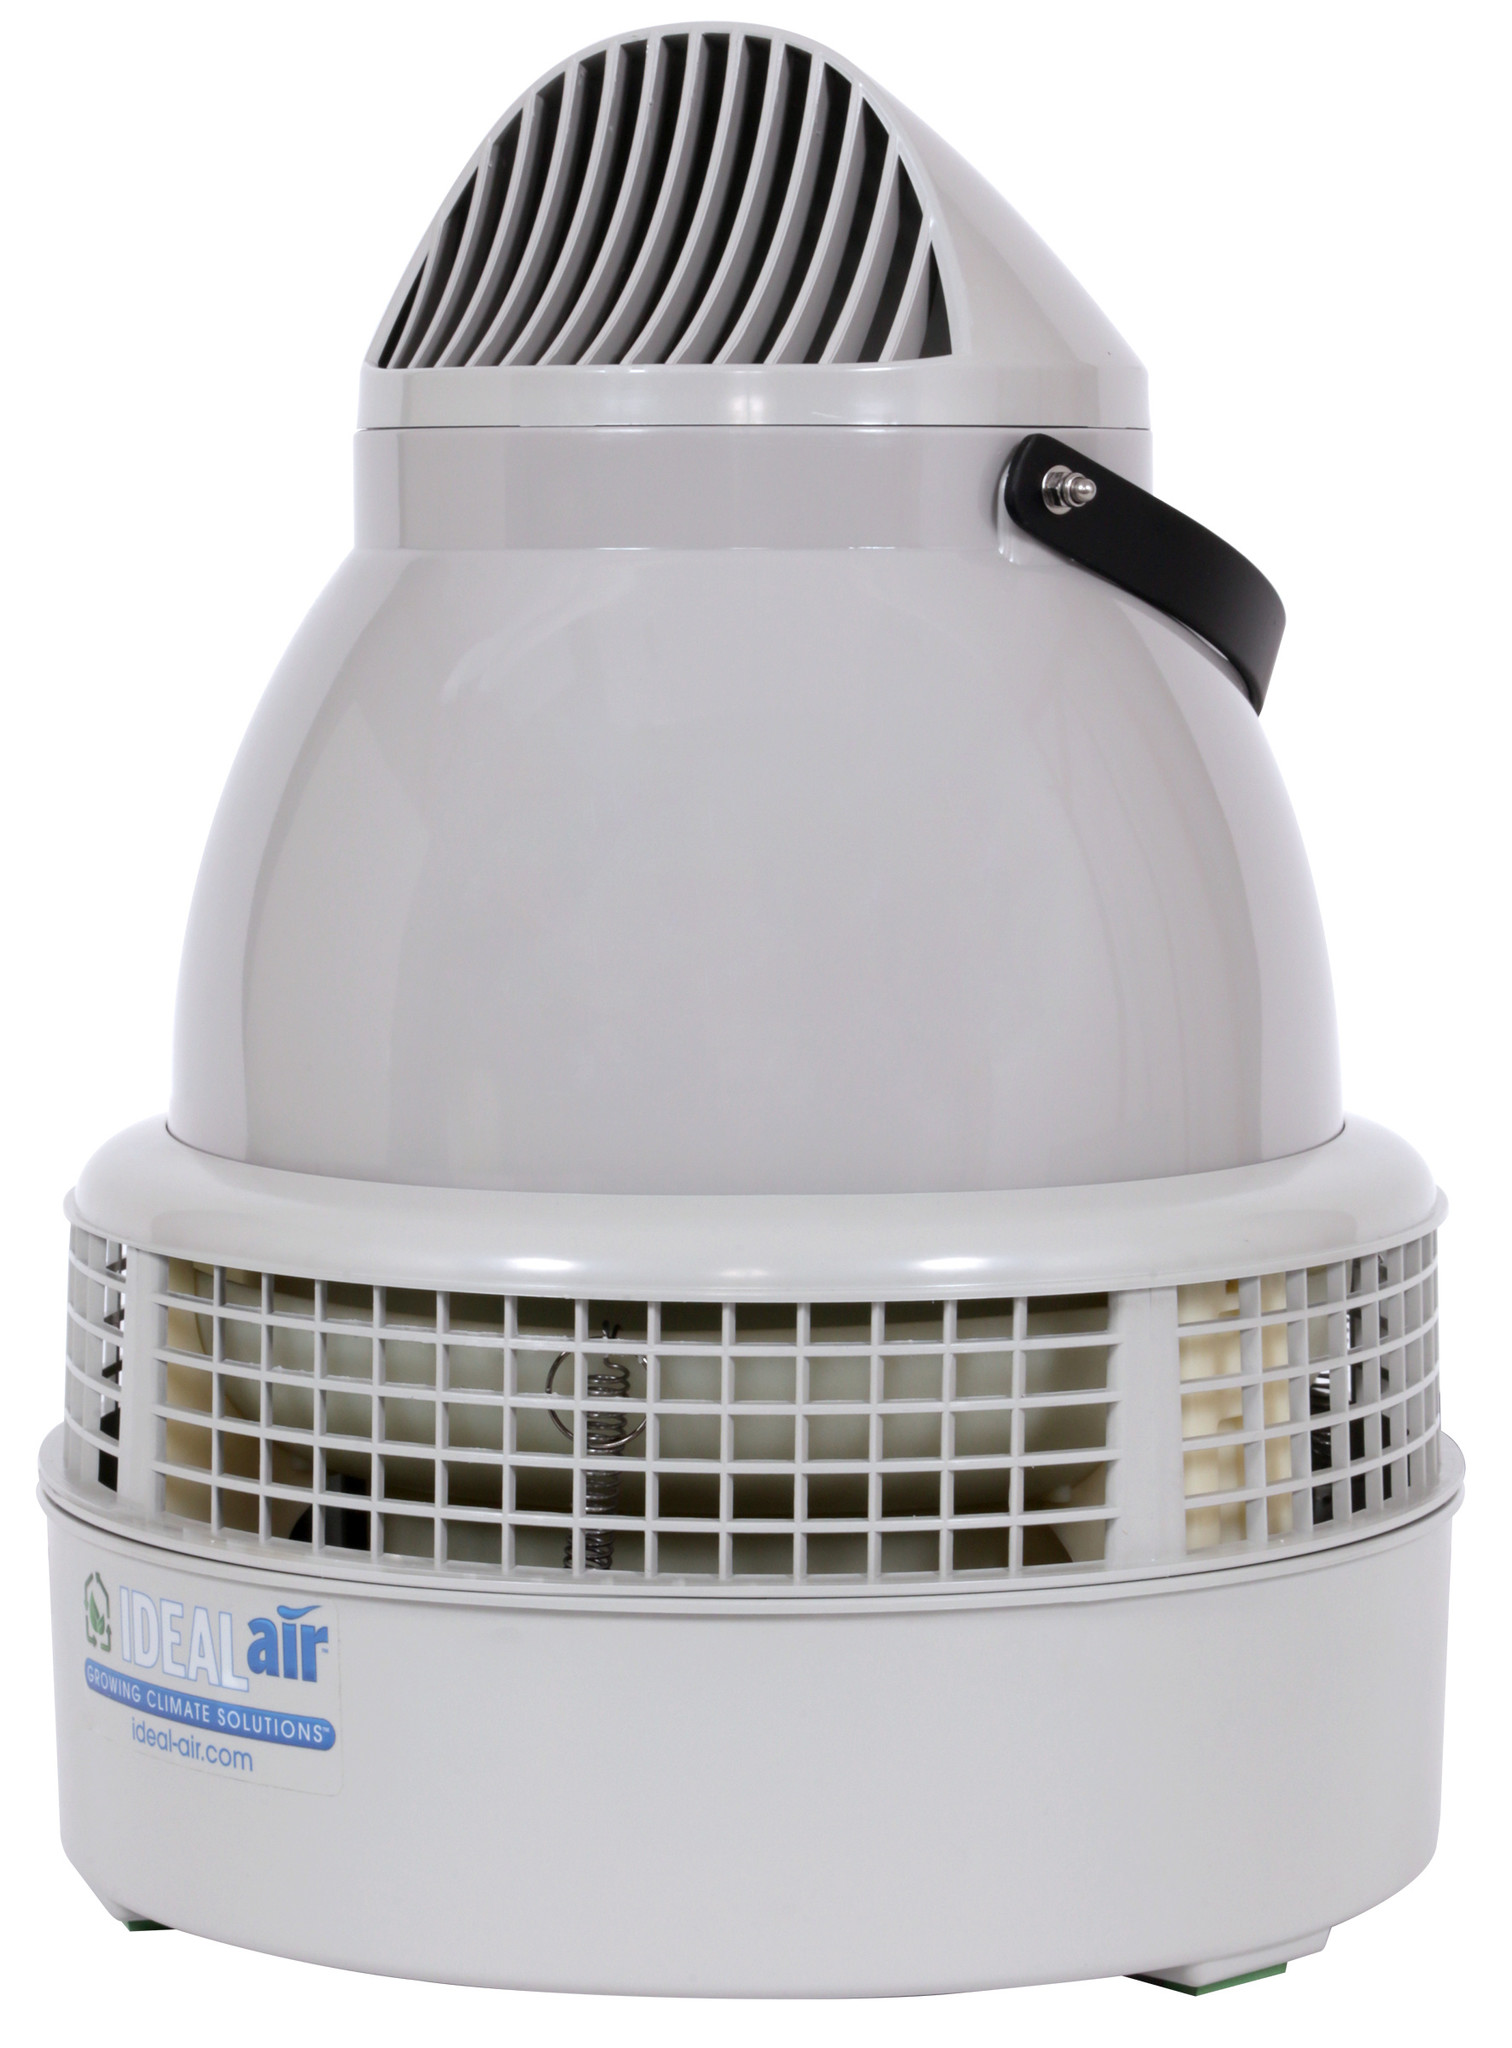 Ideal Air Commercial Grade Humidifier 75 Pints, 110v